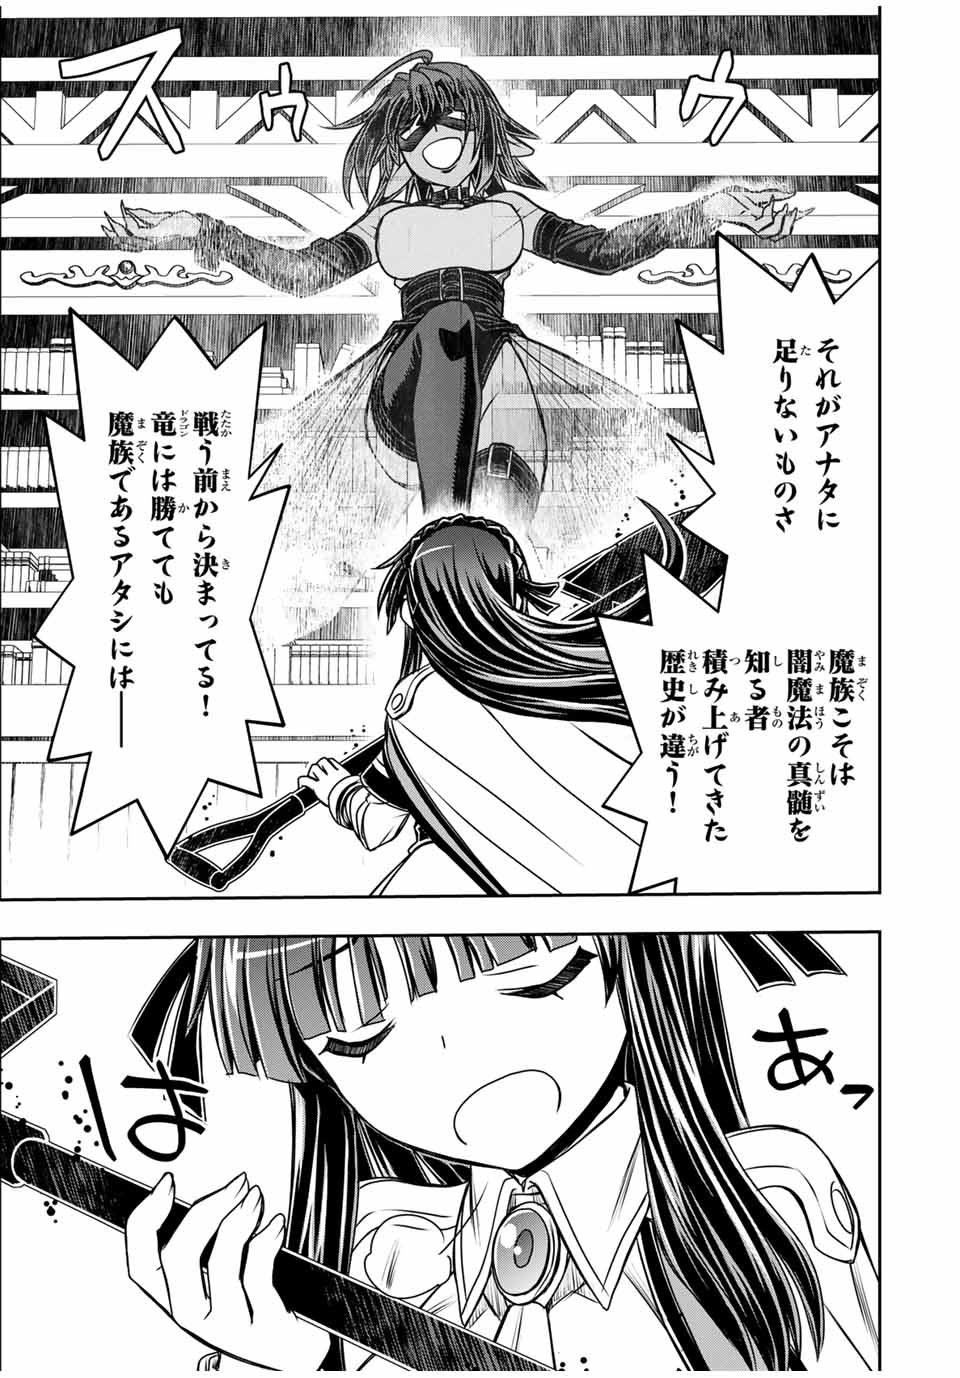 Nengan no Akuyaku Reijou (Last Boss) no Karada wo Teniiretazo!  - Chapter 26 - Page 13